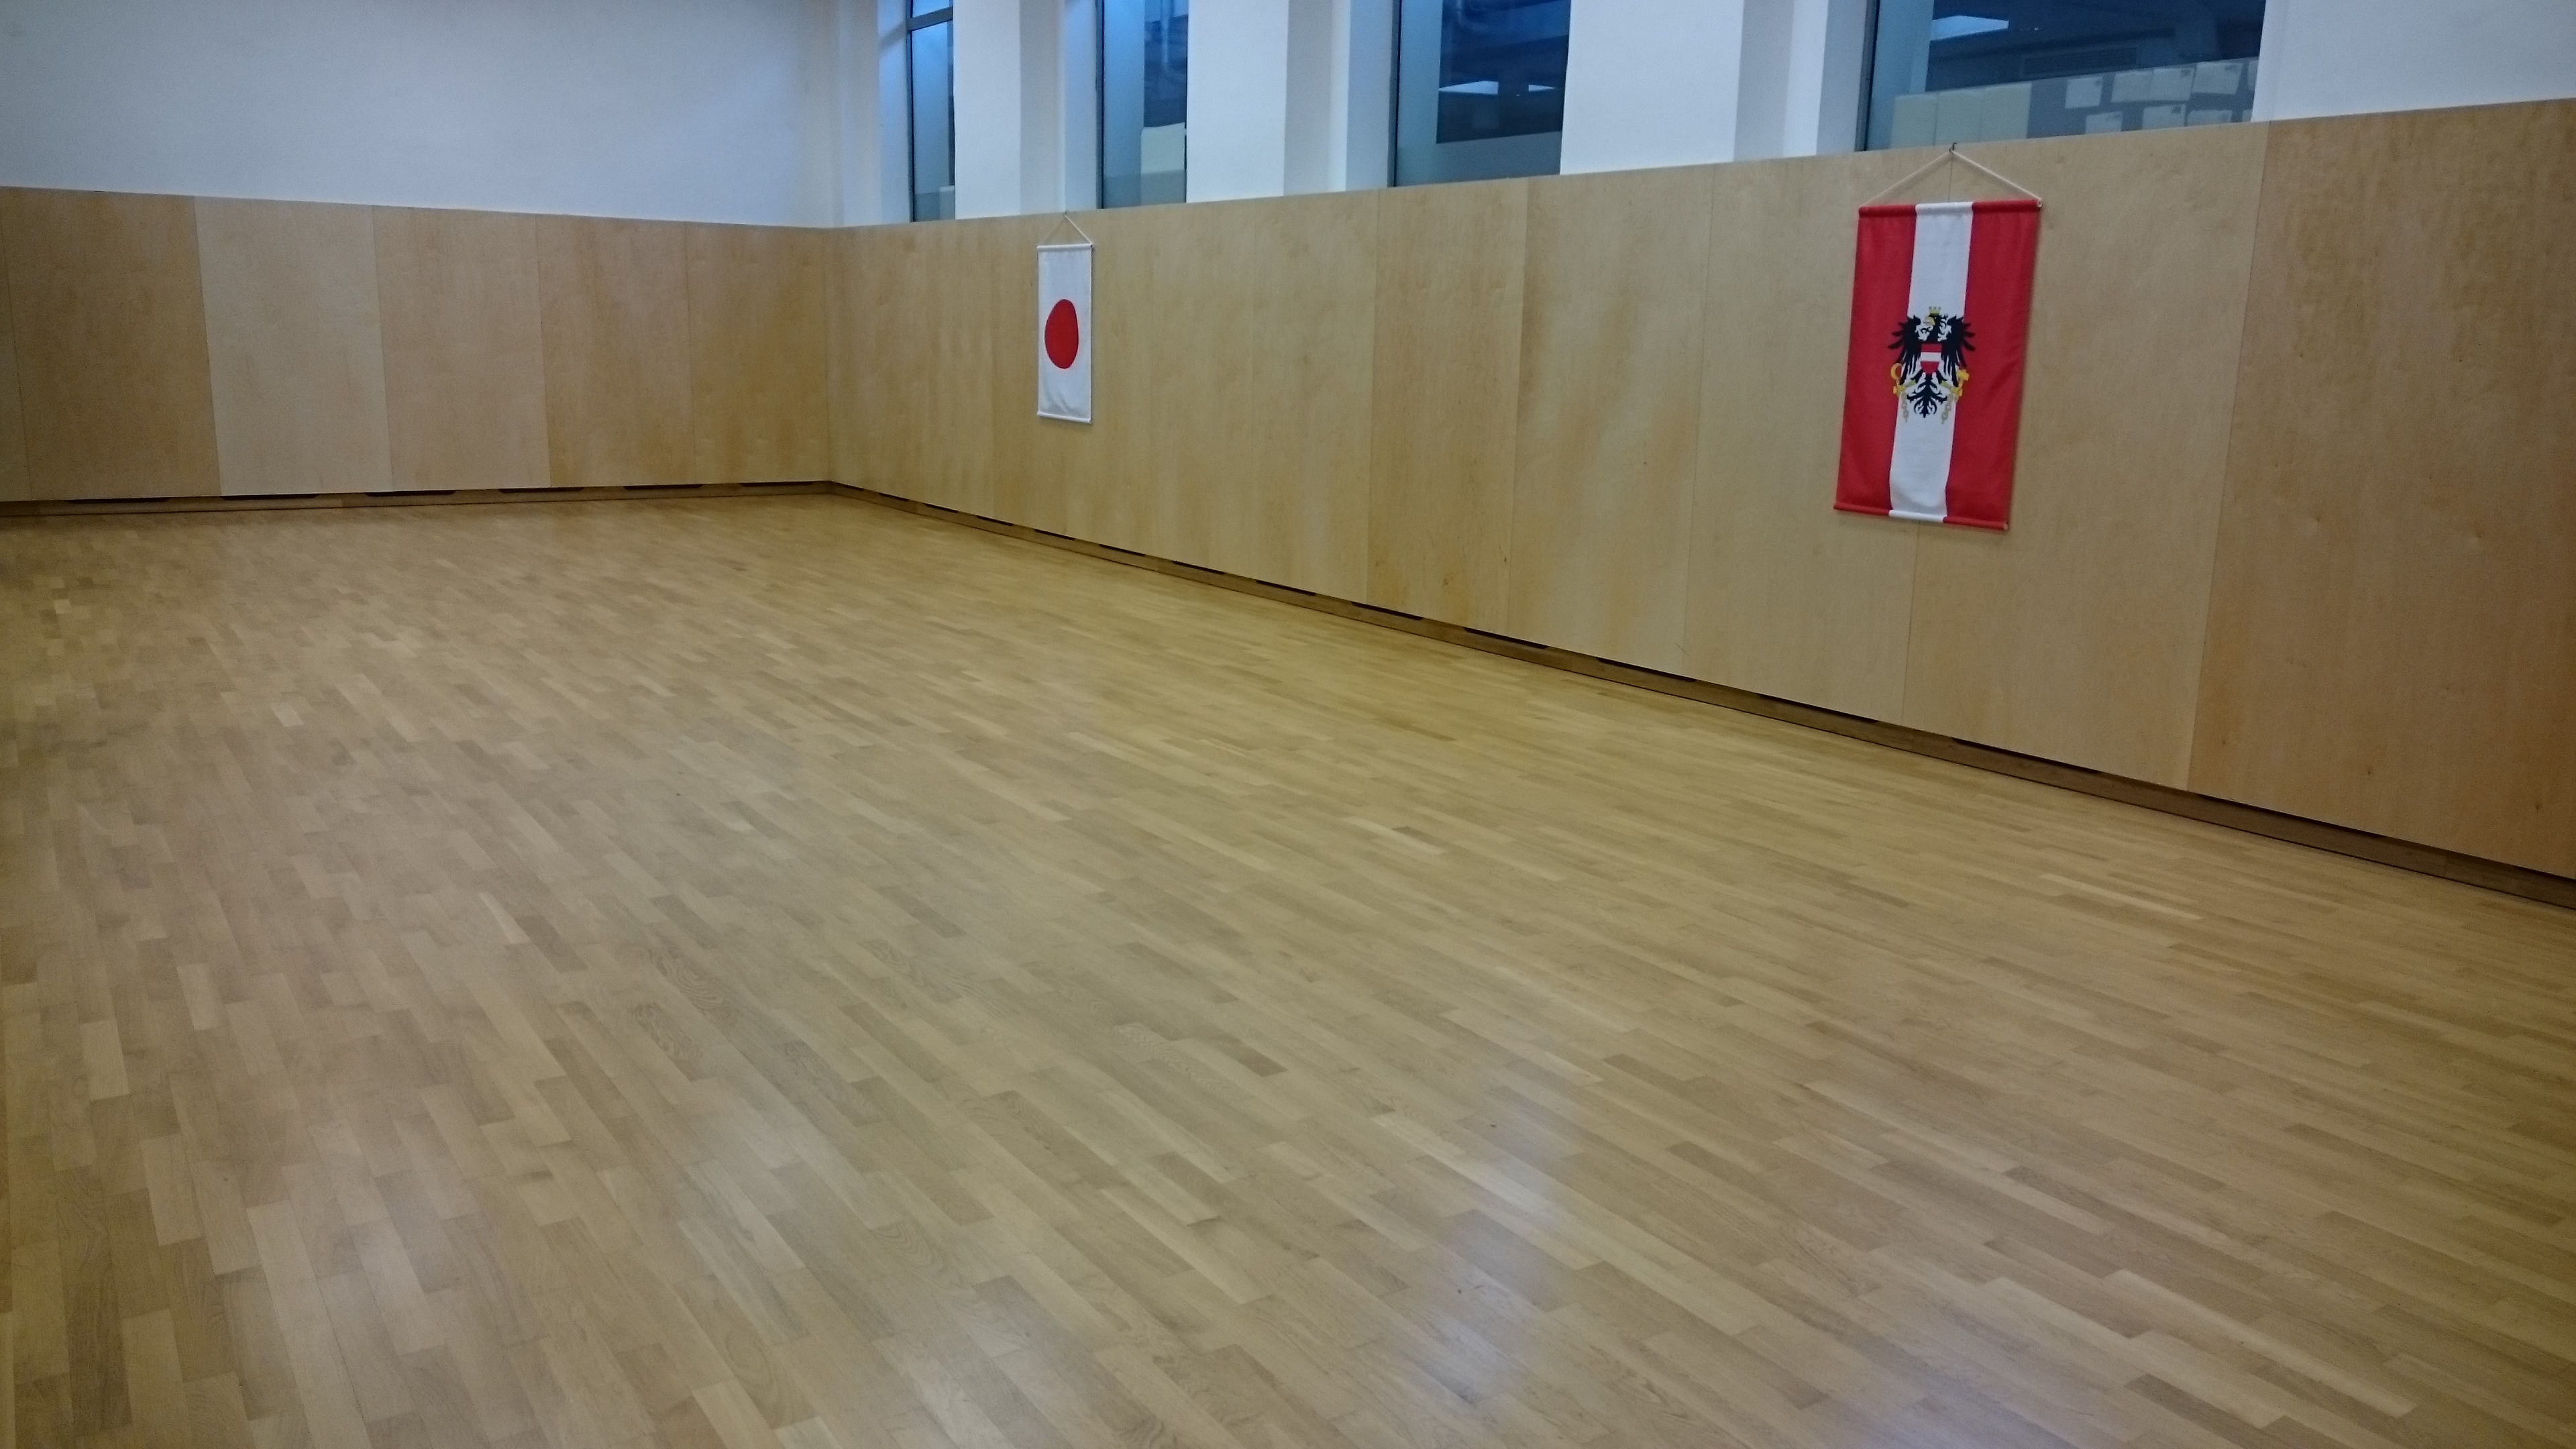 Dōjō (jap. 道場, Ort des Weges) - Trainingsraum